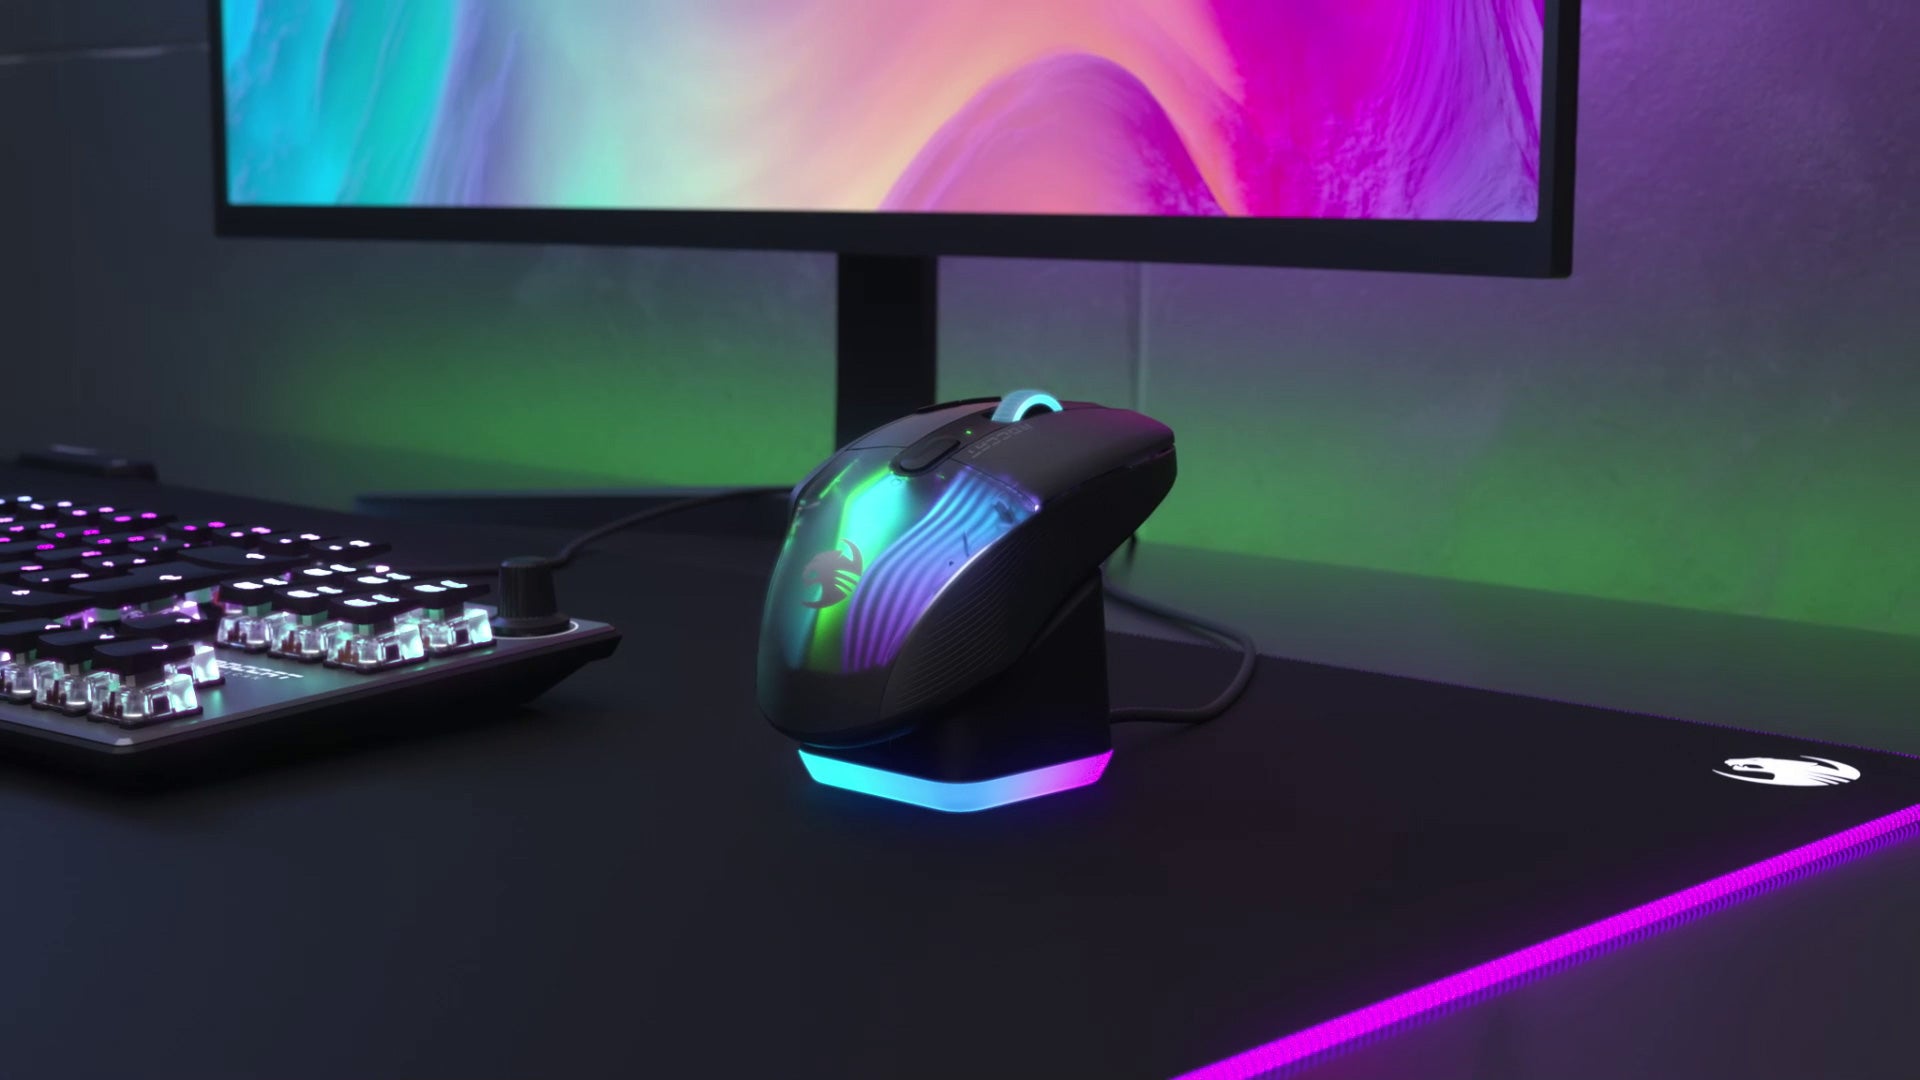 Kone XP Air Gaming Mouse & Charging Dock